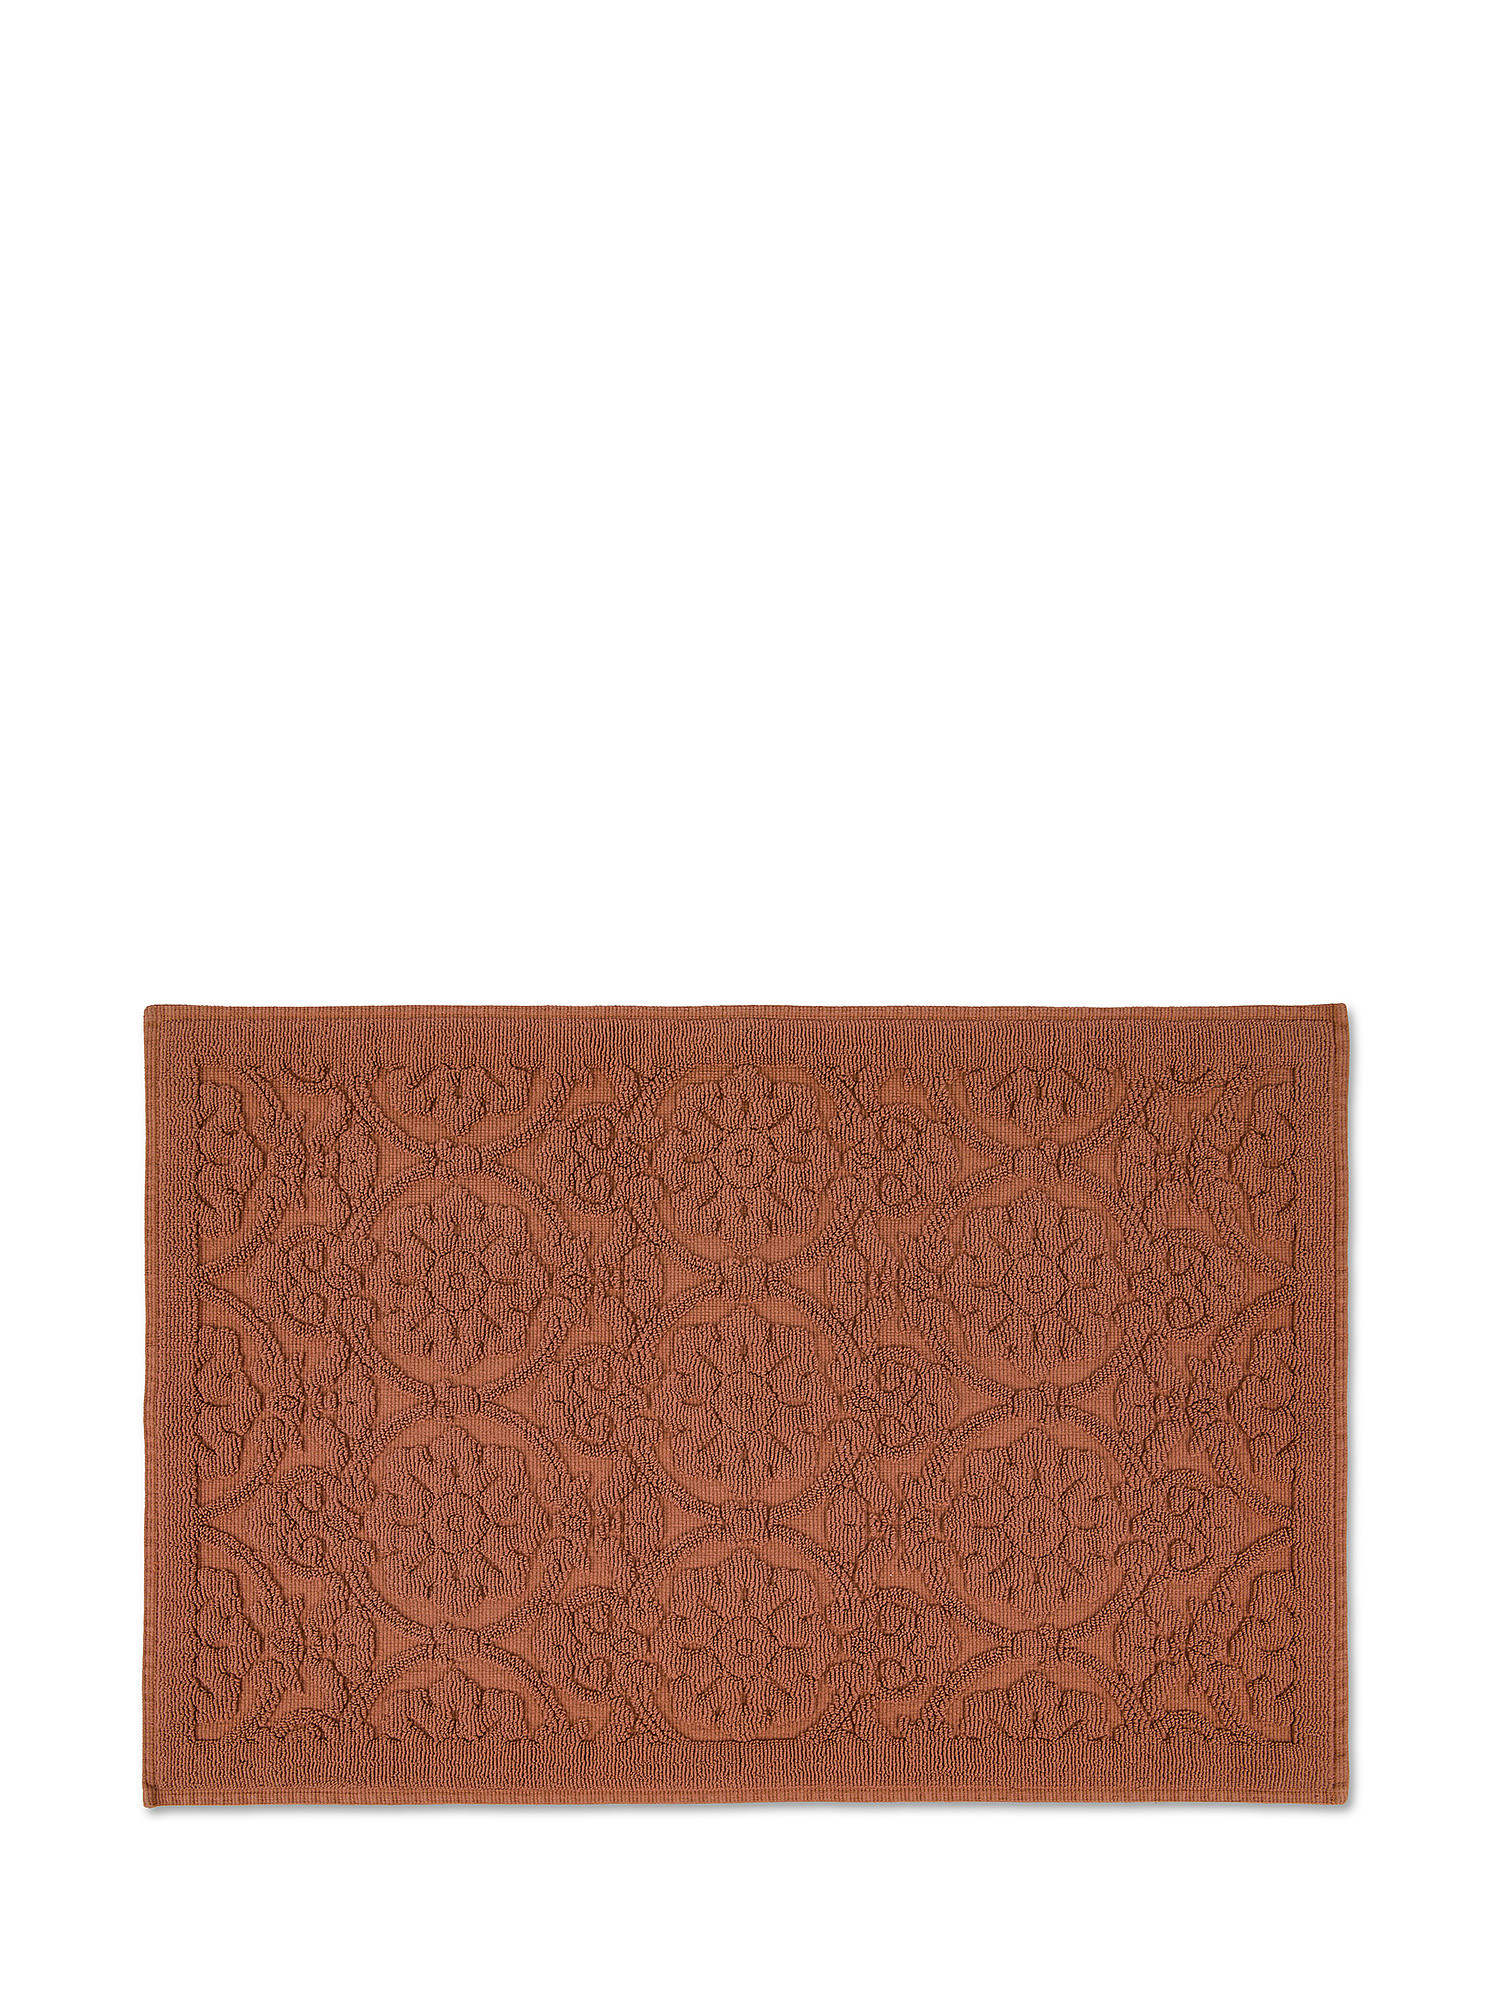 Zefiro solid color cotton shower mat, Light Brown, large image number 0